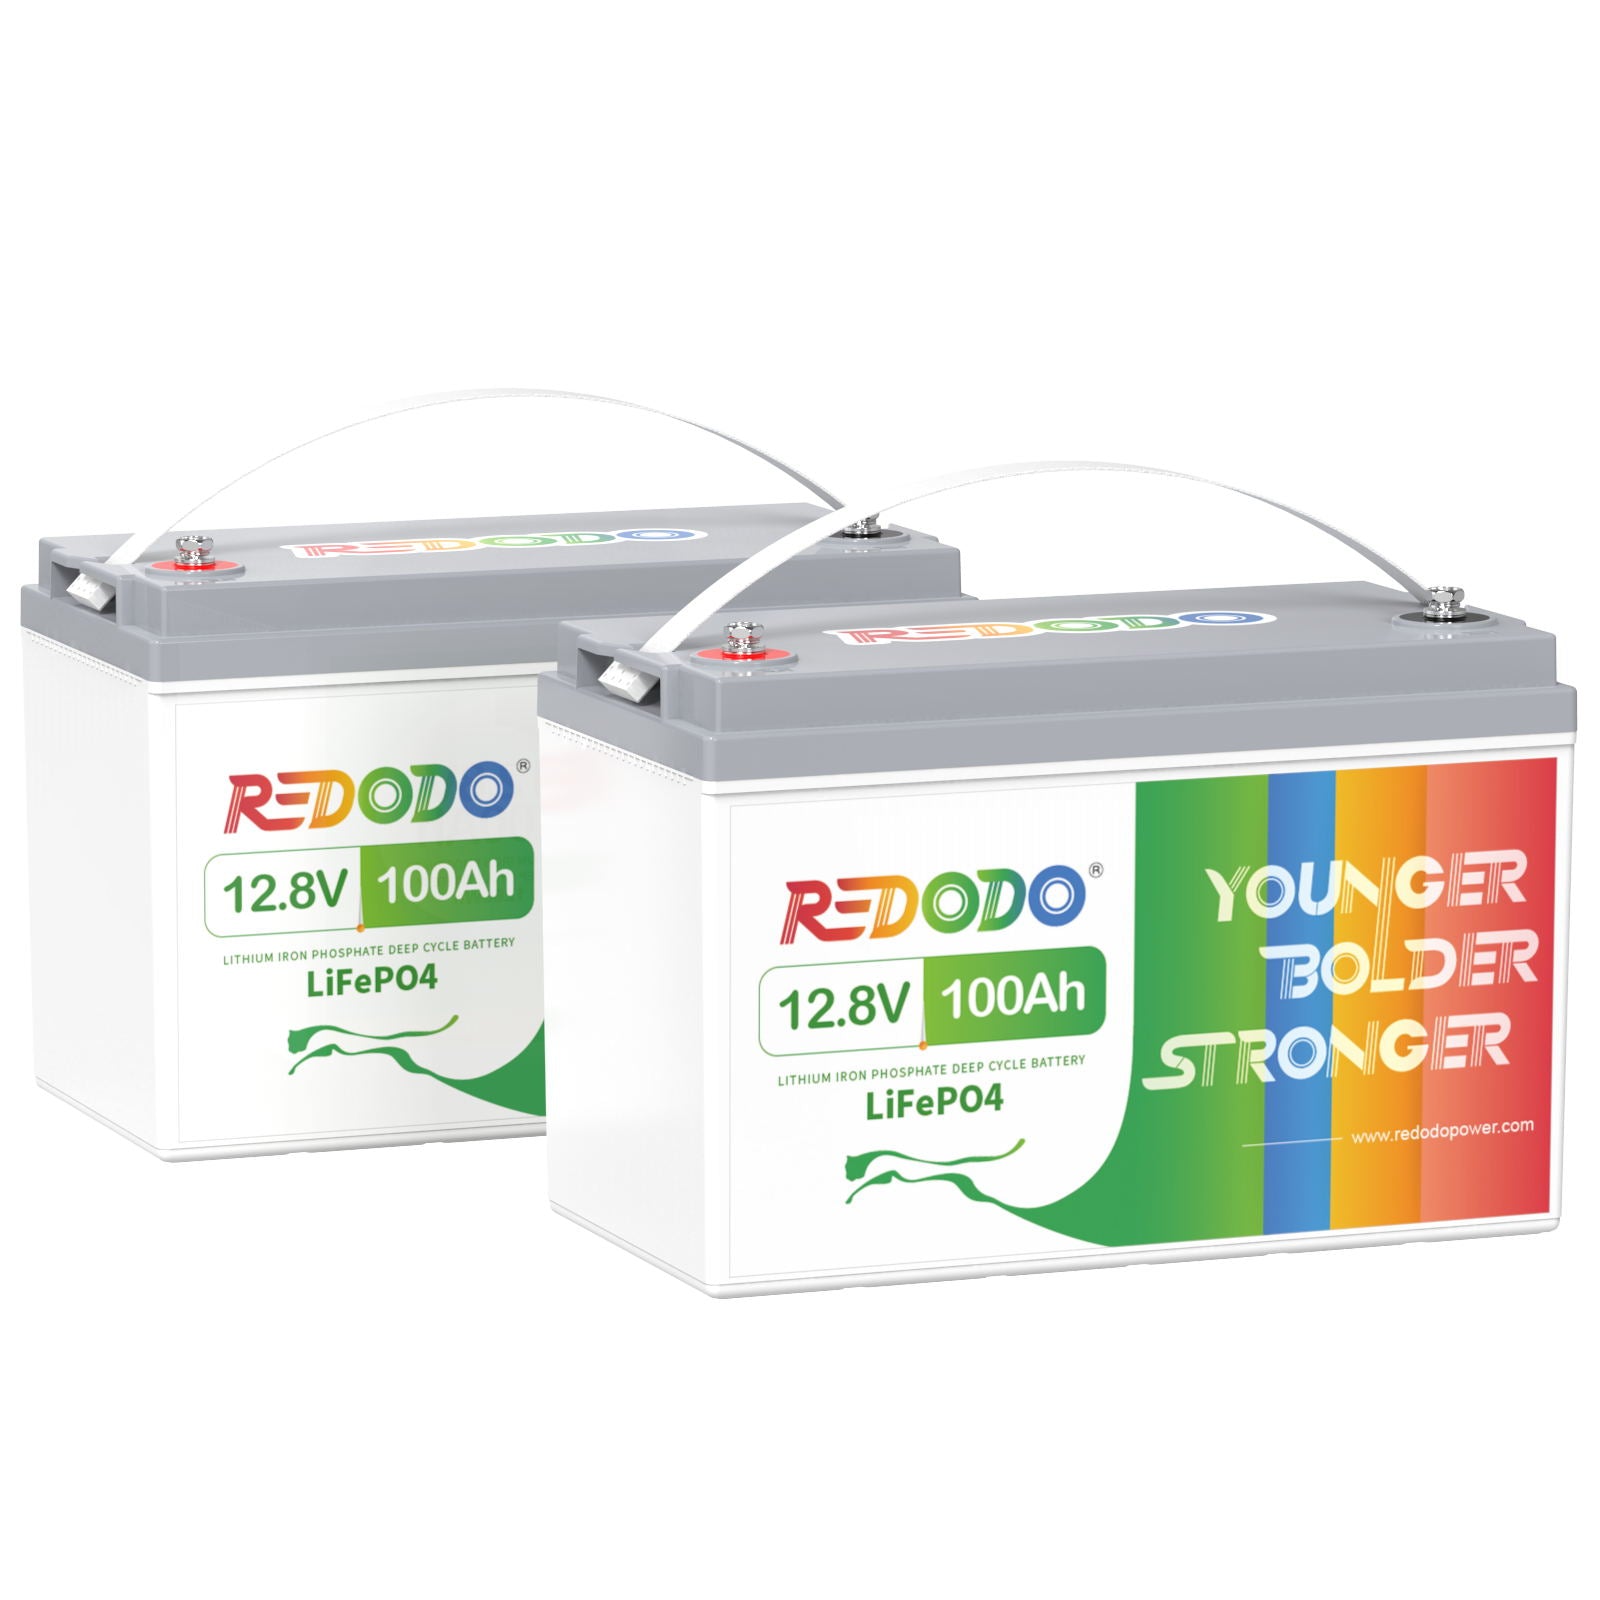 Redodo 24V 200Ah LiFePO4 Battery